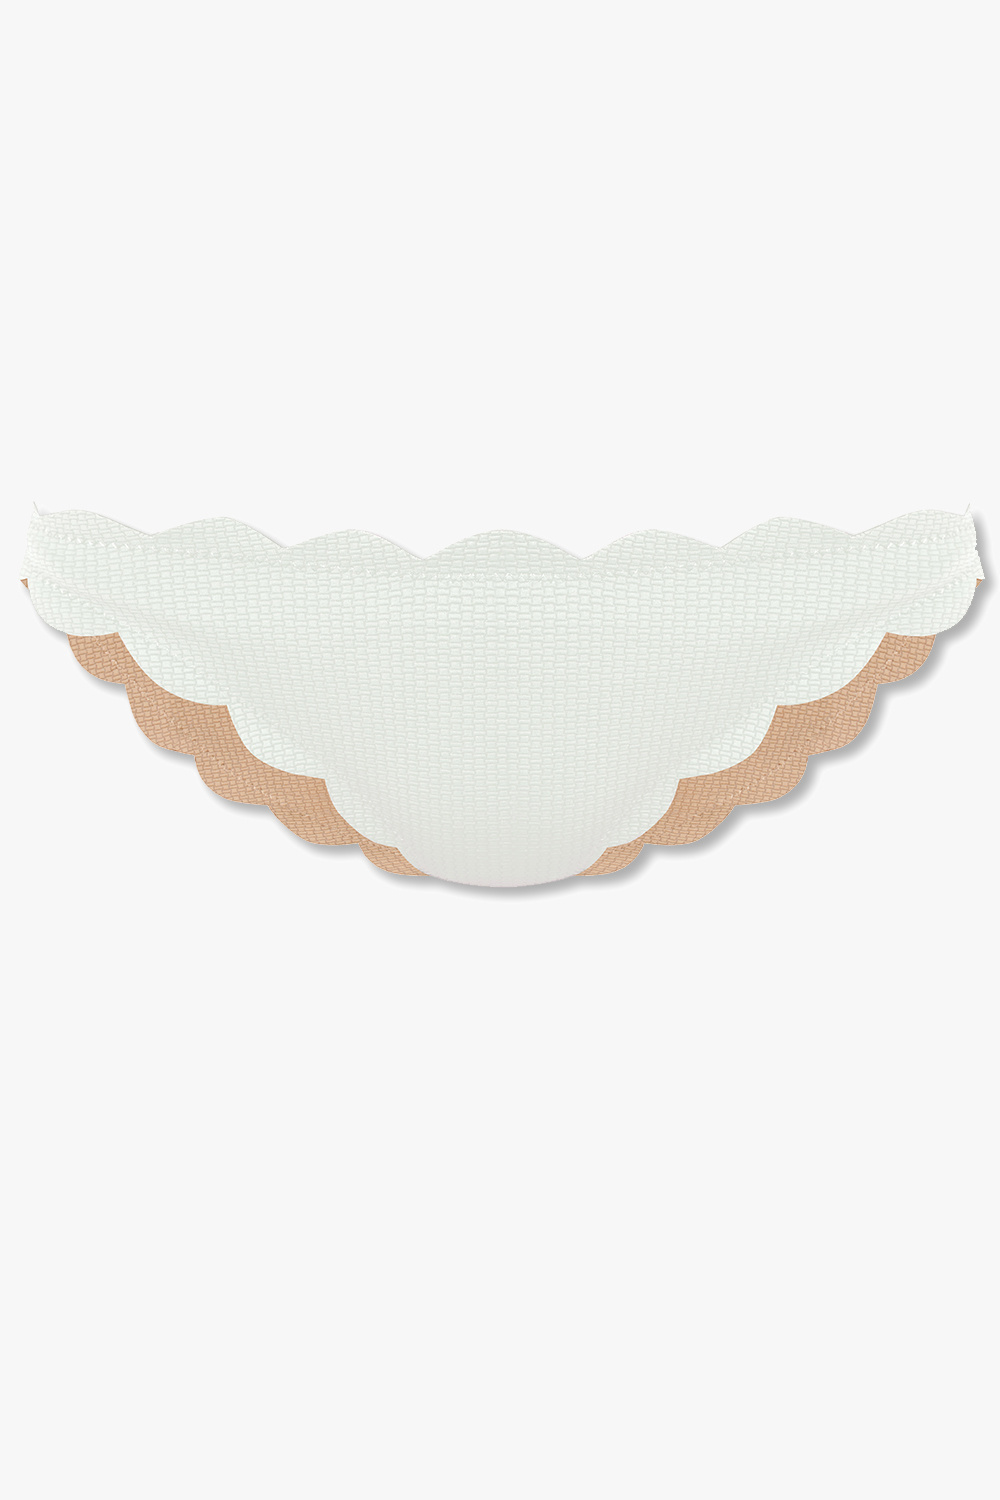 Marysia ‘Antibes’ reversible swimsuit bottom